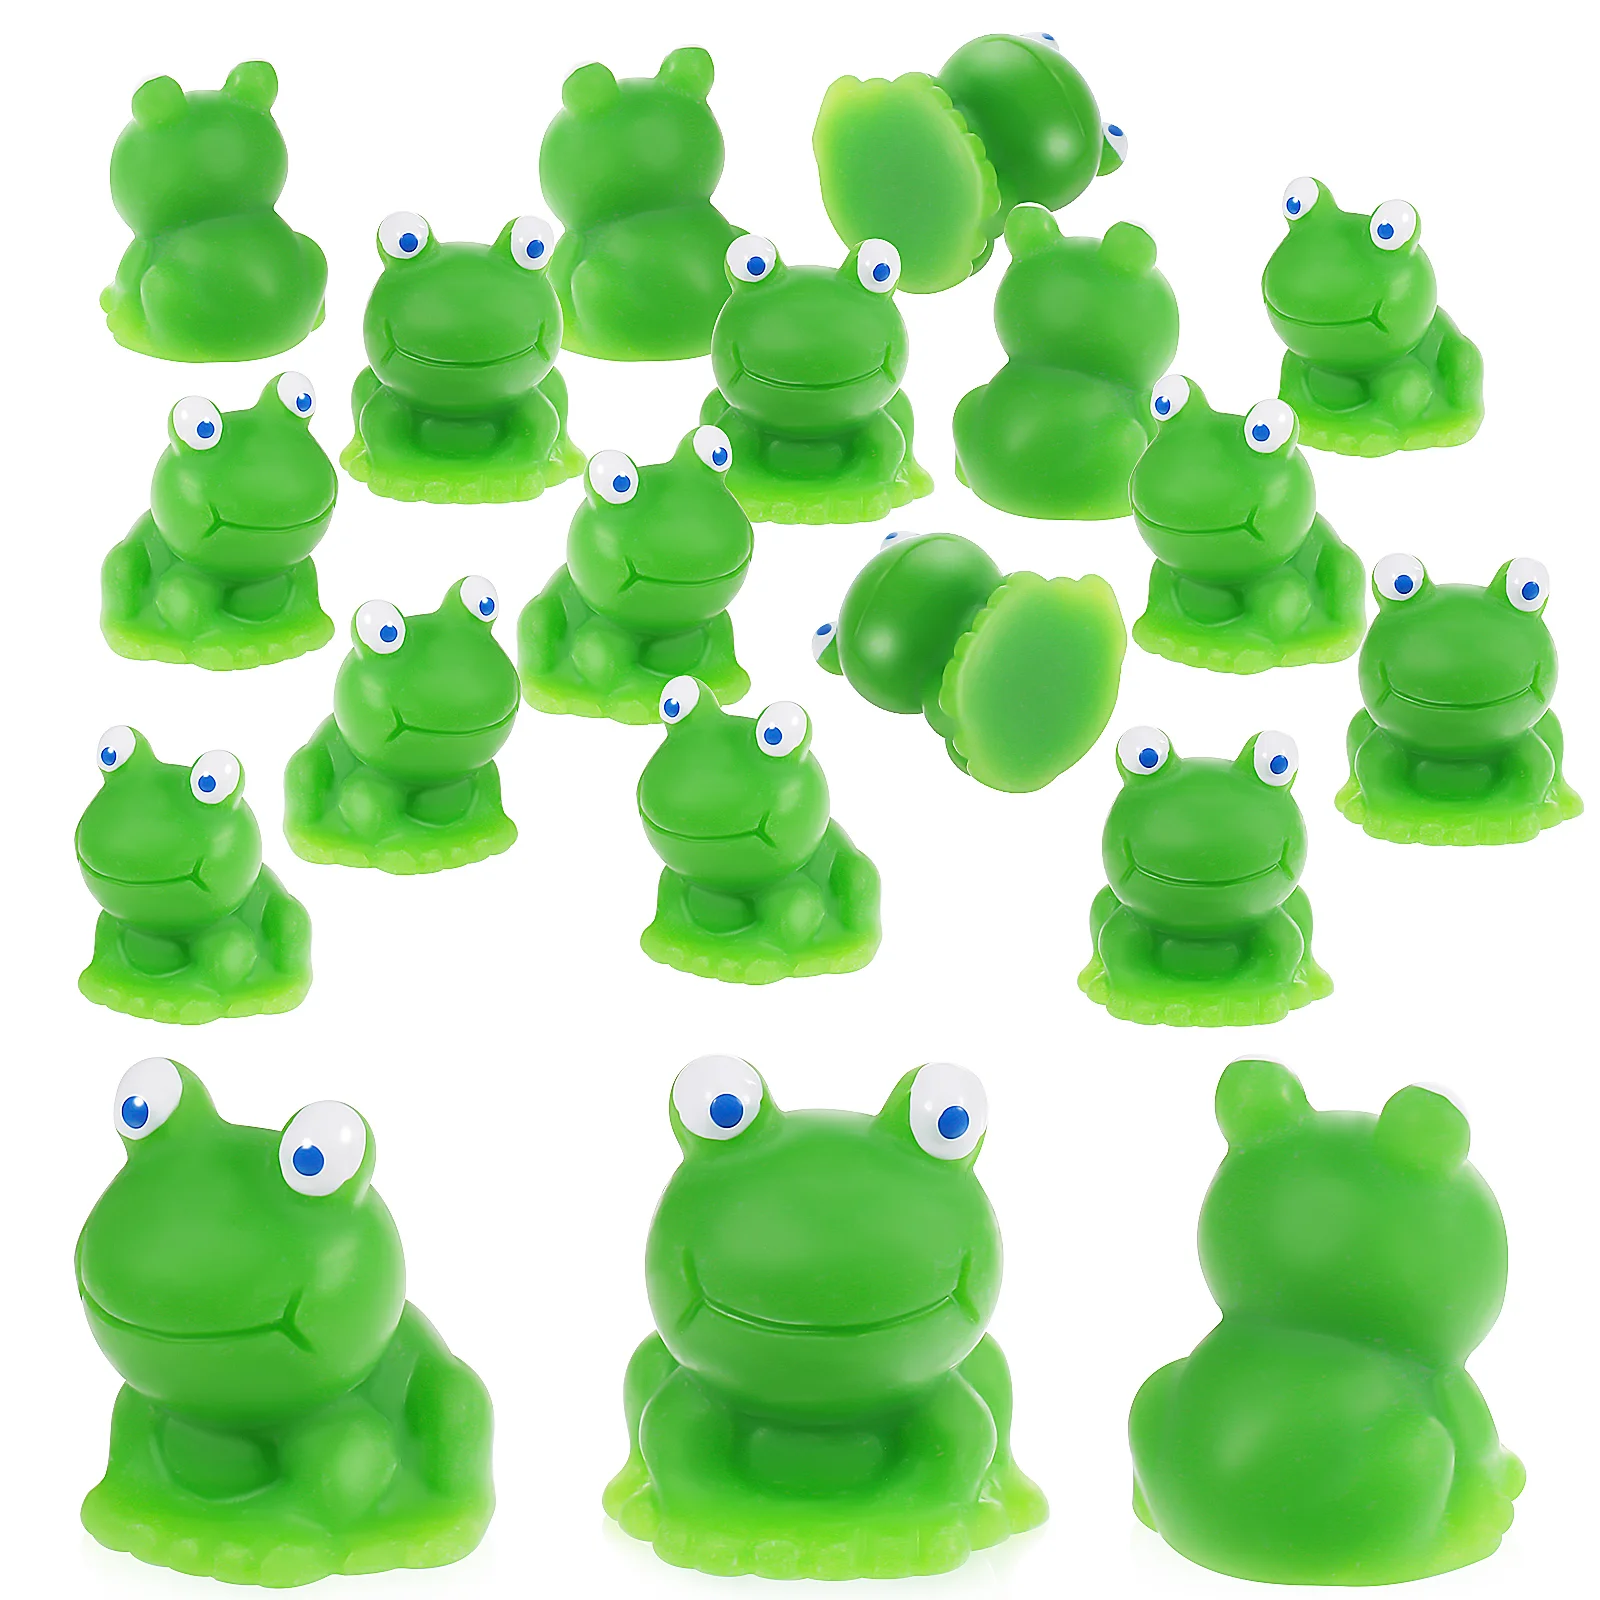 

Resin Frog Figurines Realistic Frog Models Animal Models Educational Teaching Props Kid Toys Playthings Ornaments